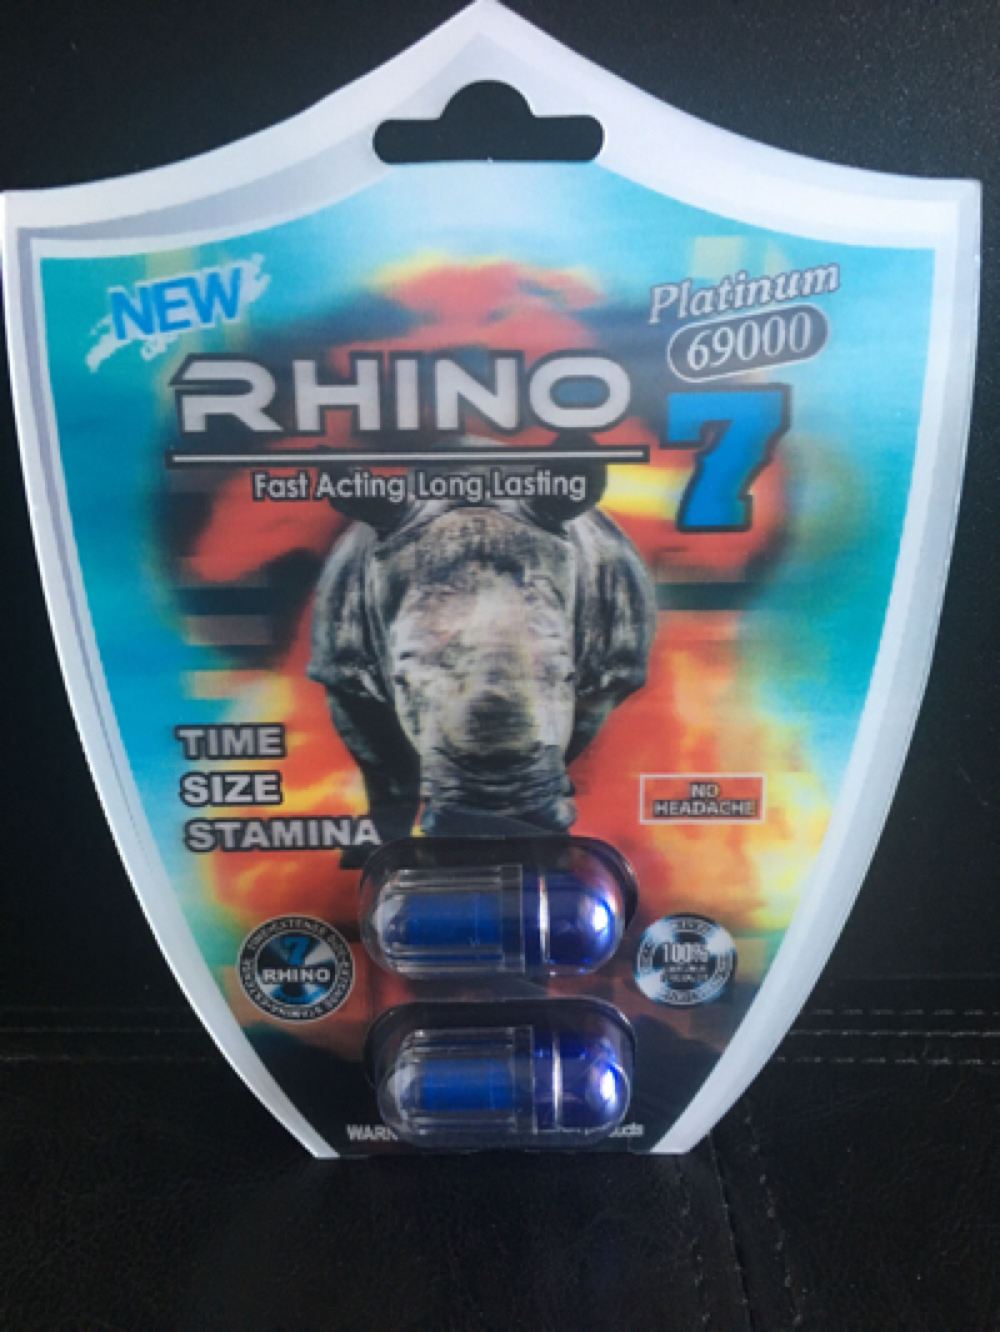 rhino 7 platinum 10000 reviews